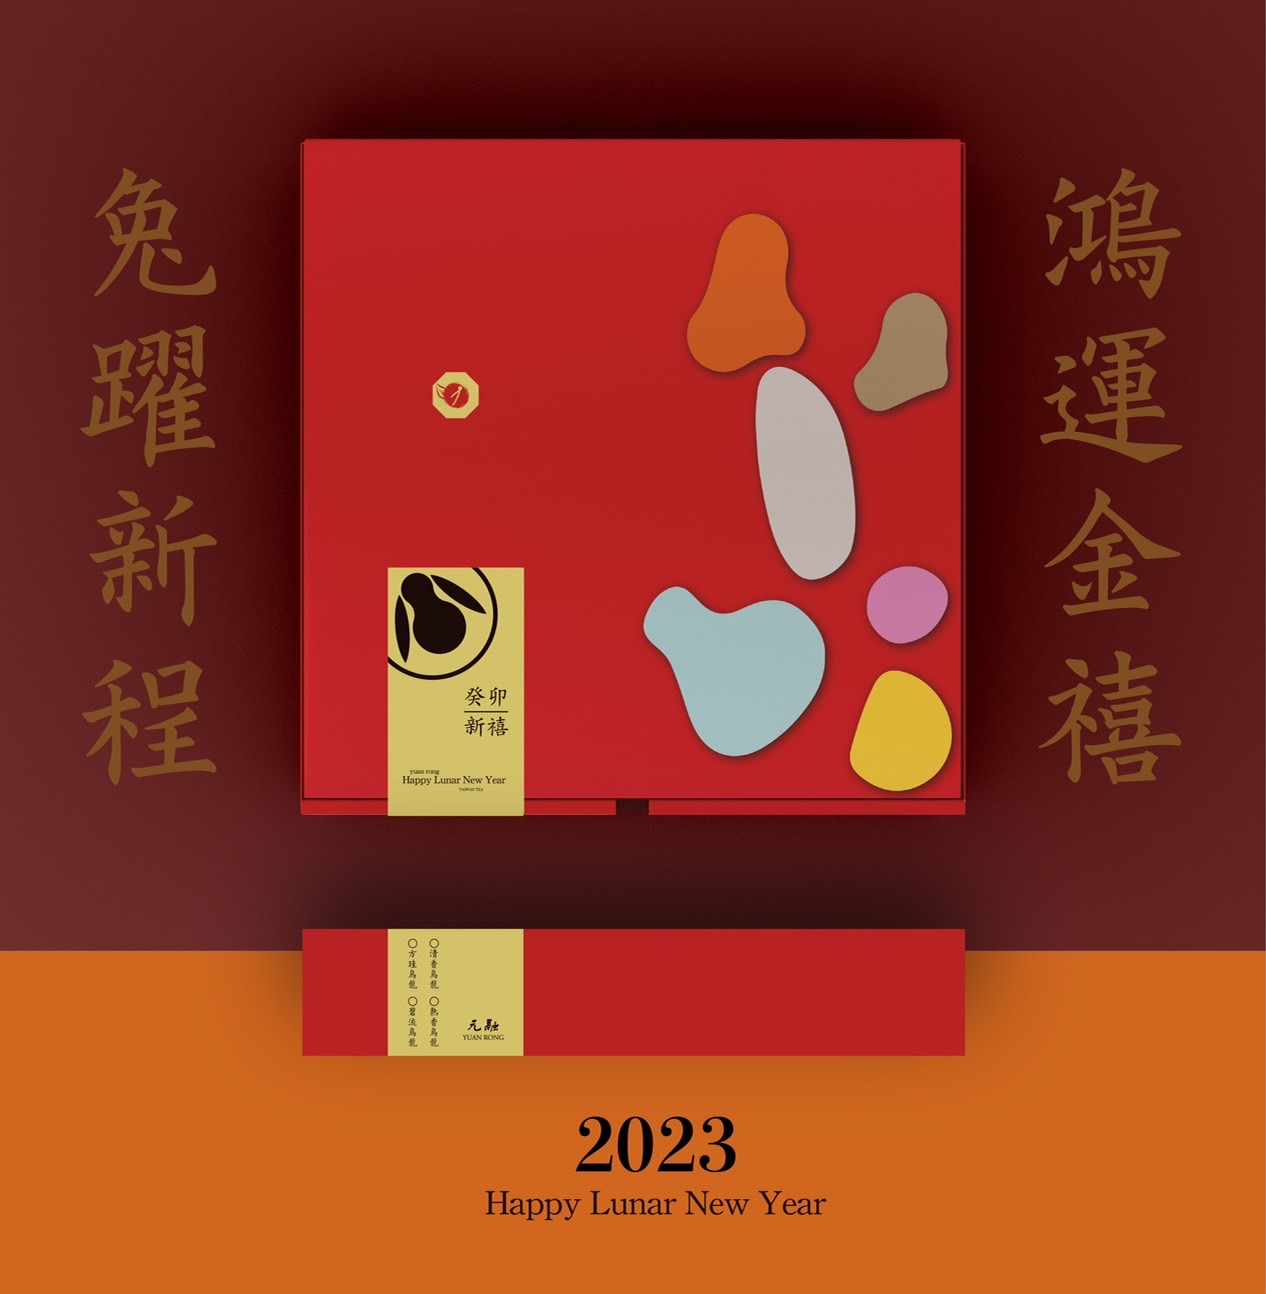 2022-11-27 by 元融堂 in 新品